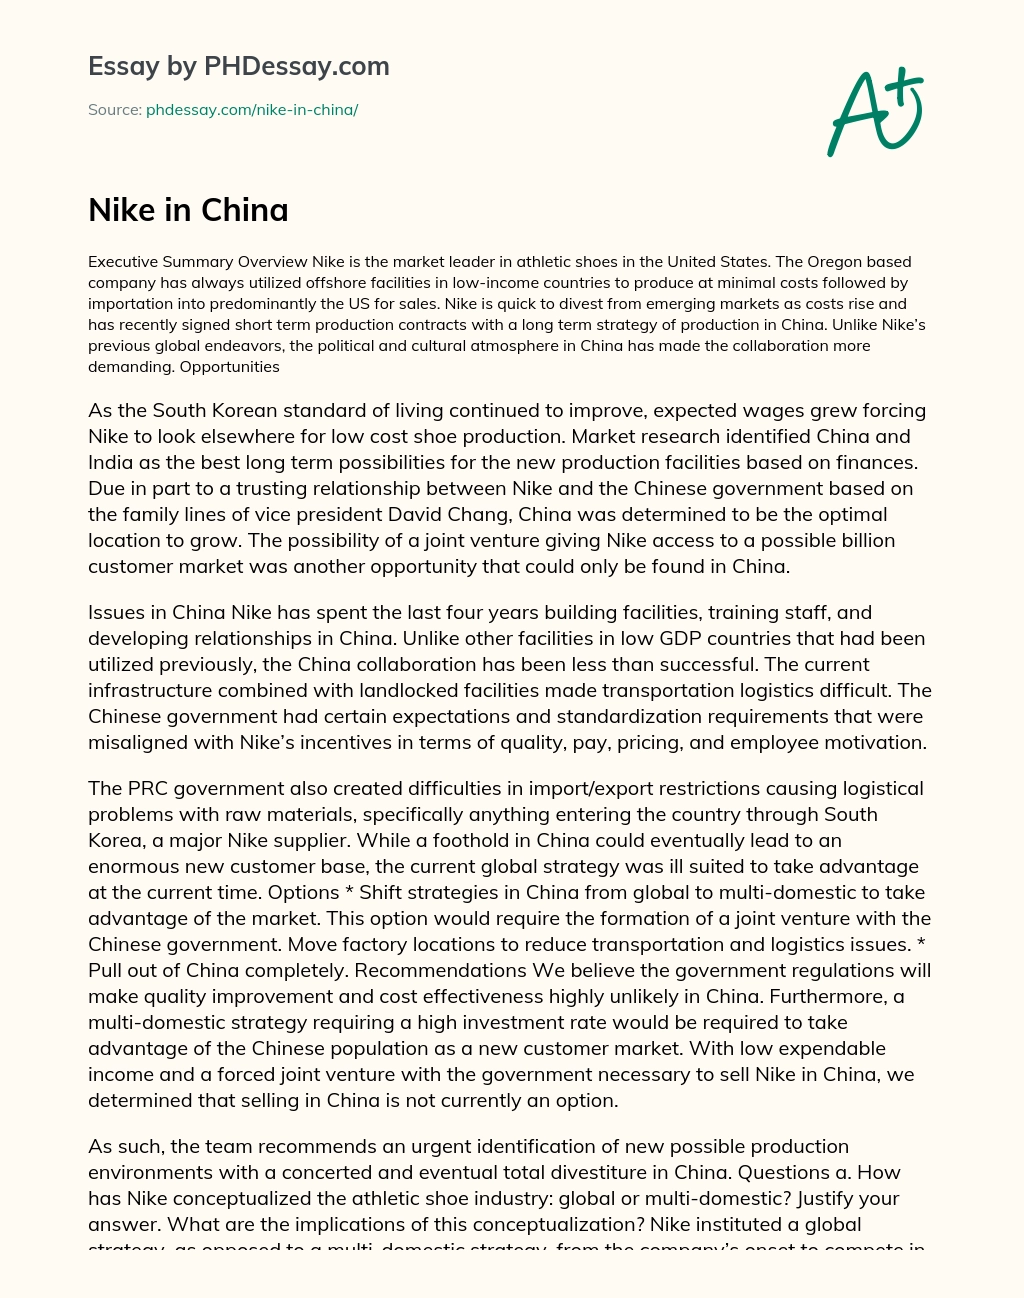 Nike in China essay